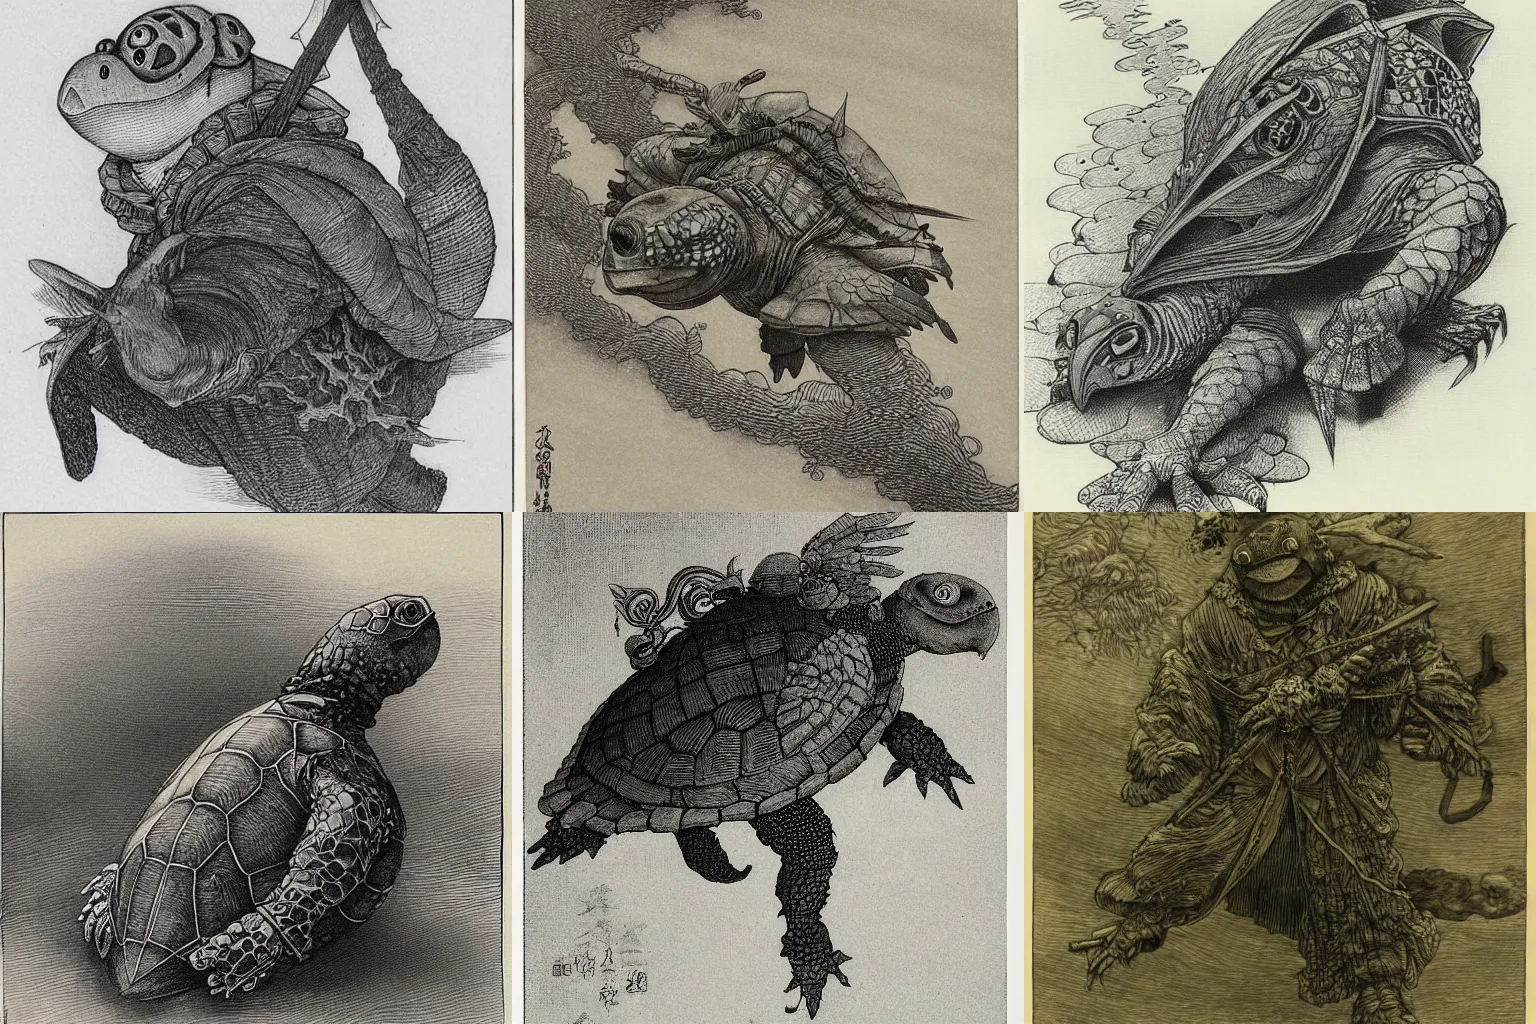 Prompt: tengu turtle by Yoshitaka Amano, style of Gustave Dore, style of John Kenn Mortensen